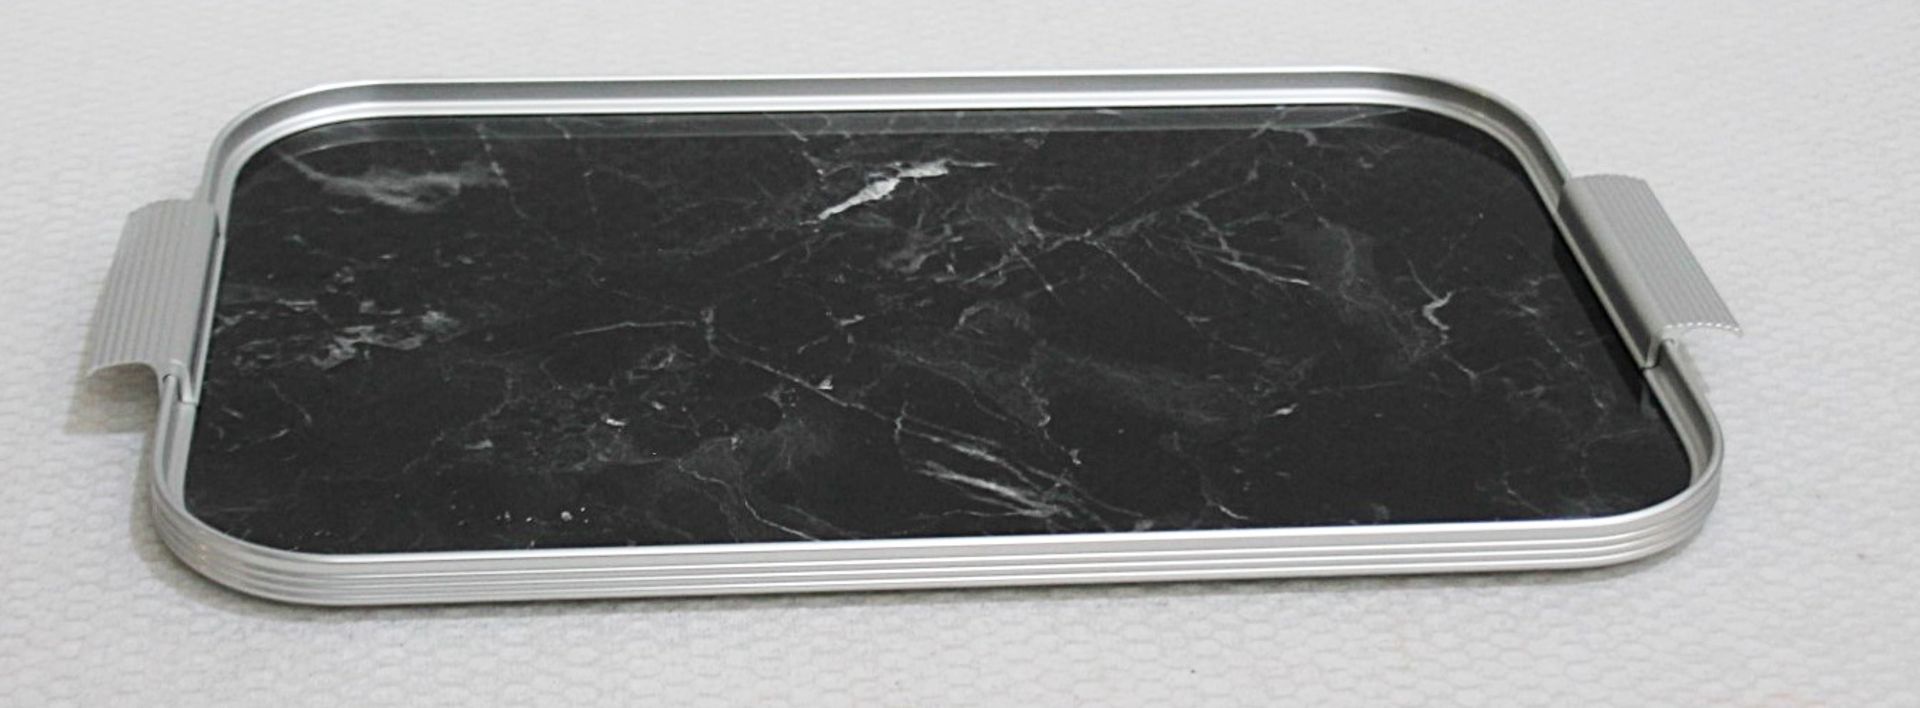 1 x KAYMET Silver Marble Serving Tray (40cm x 30cm) - Original Price £133.00 - Ex-Display - Ref: - Image 3 of 5